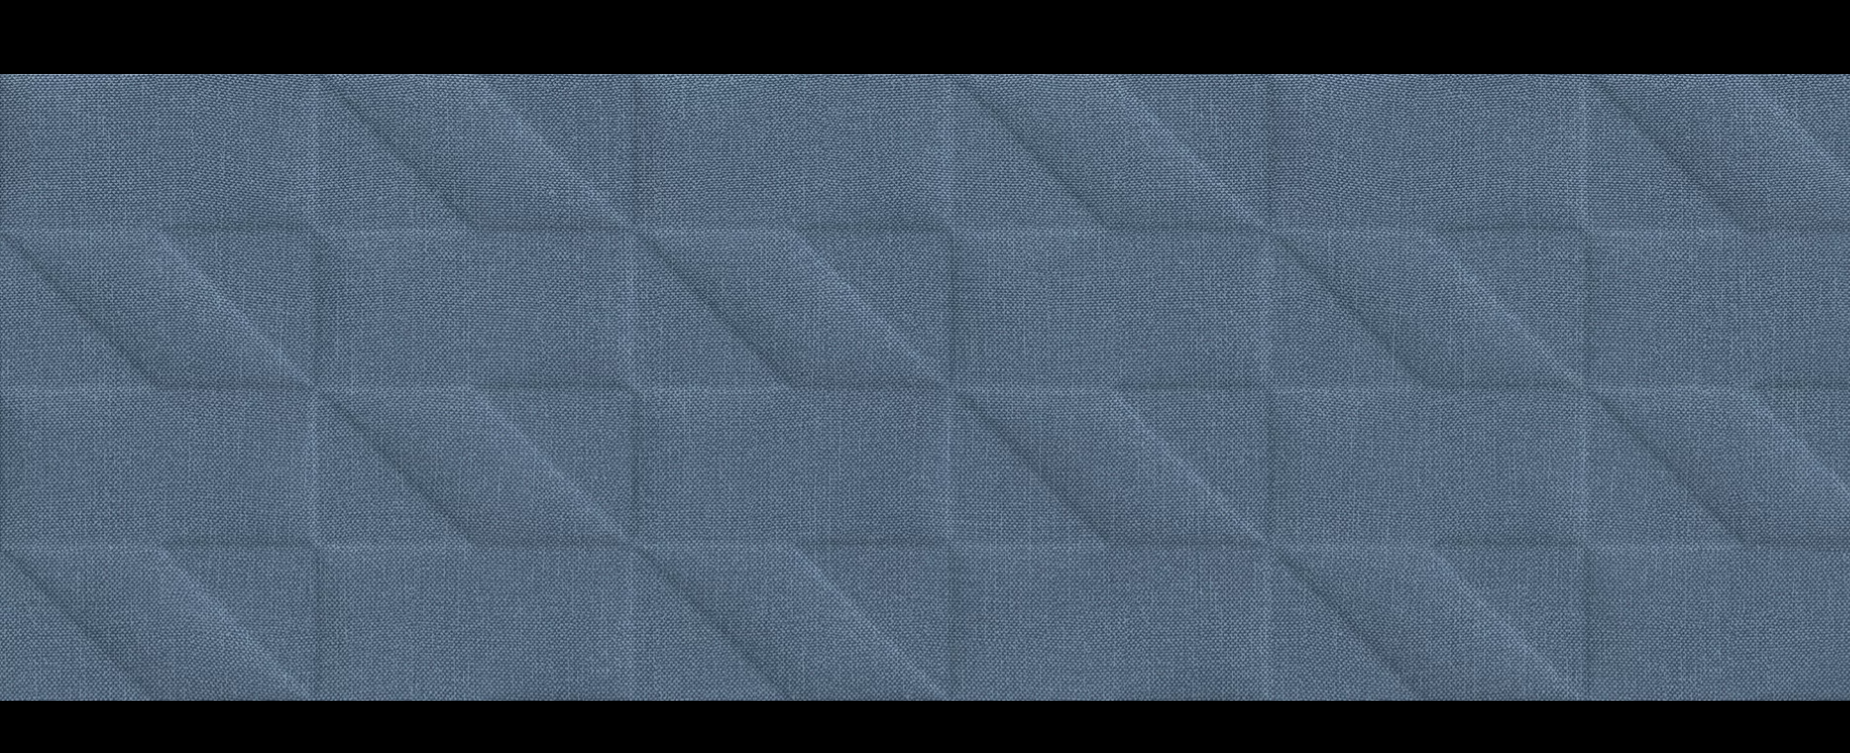 Faianta - Faianta Marazzi Outfit Blue Structured Tetris 3D 25 x 76 cm, grosime 9 mm, 1.14 MP/cutie, albastru, laguna.ro